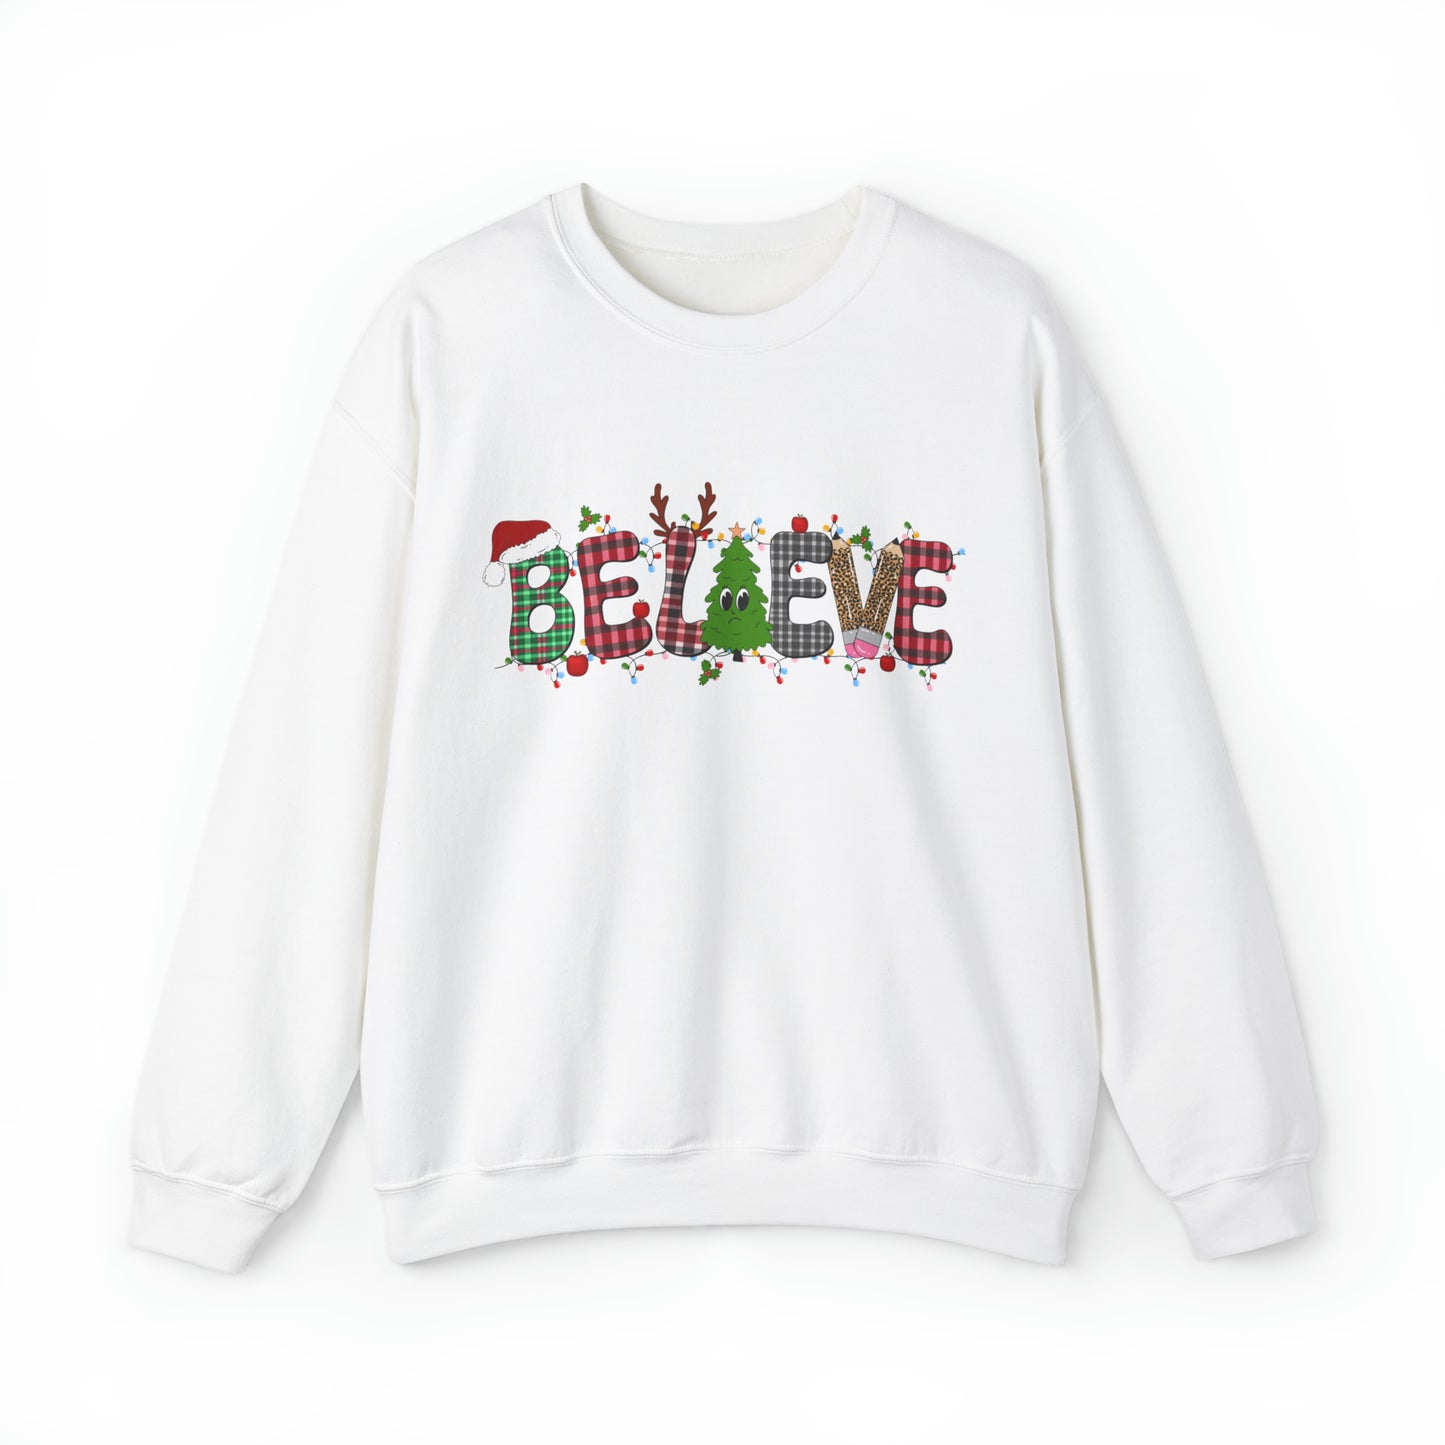 Believe Women's Christmas Sweatshirt